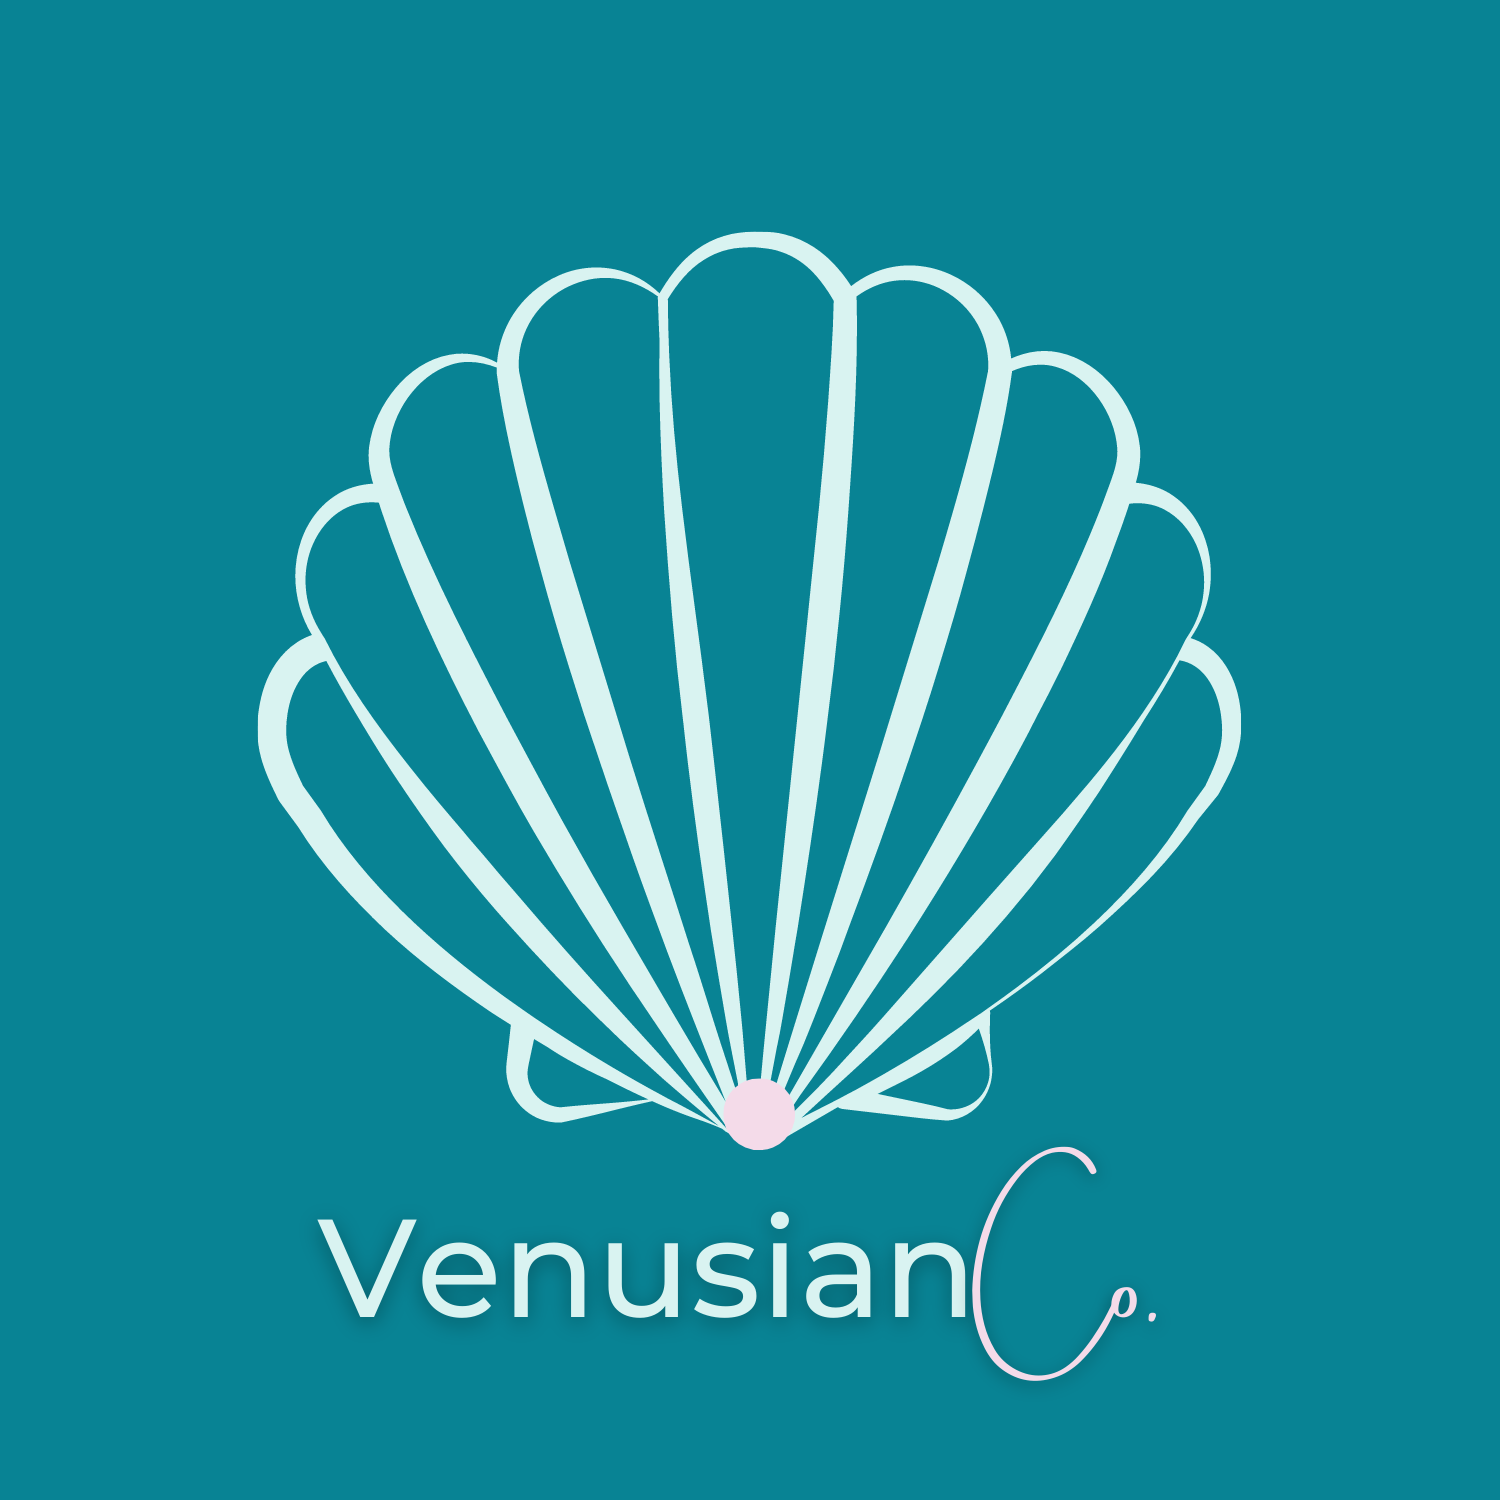 Venusian Co